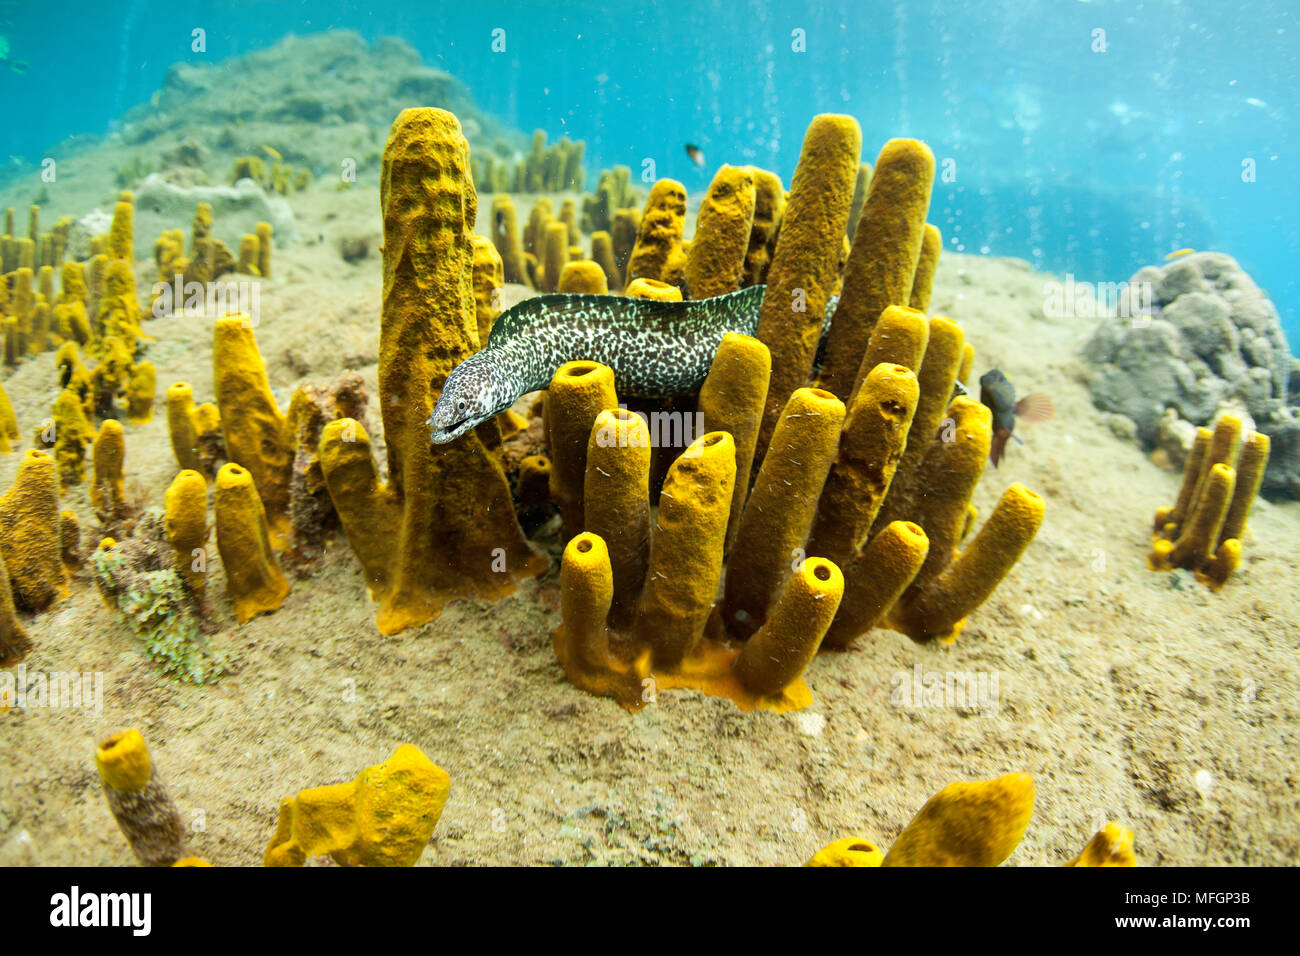 Spotted moray eel, Gymnothorax moringa interno tubo giallo spugne, Aplysina fistularis, Dominica, Mar dei Caraibi e Oceano Atlantico. Foto Stock